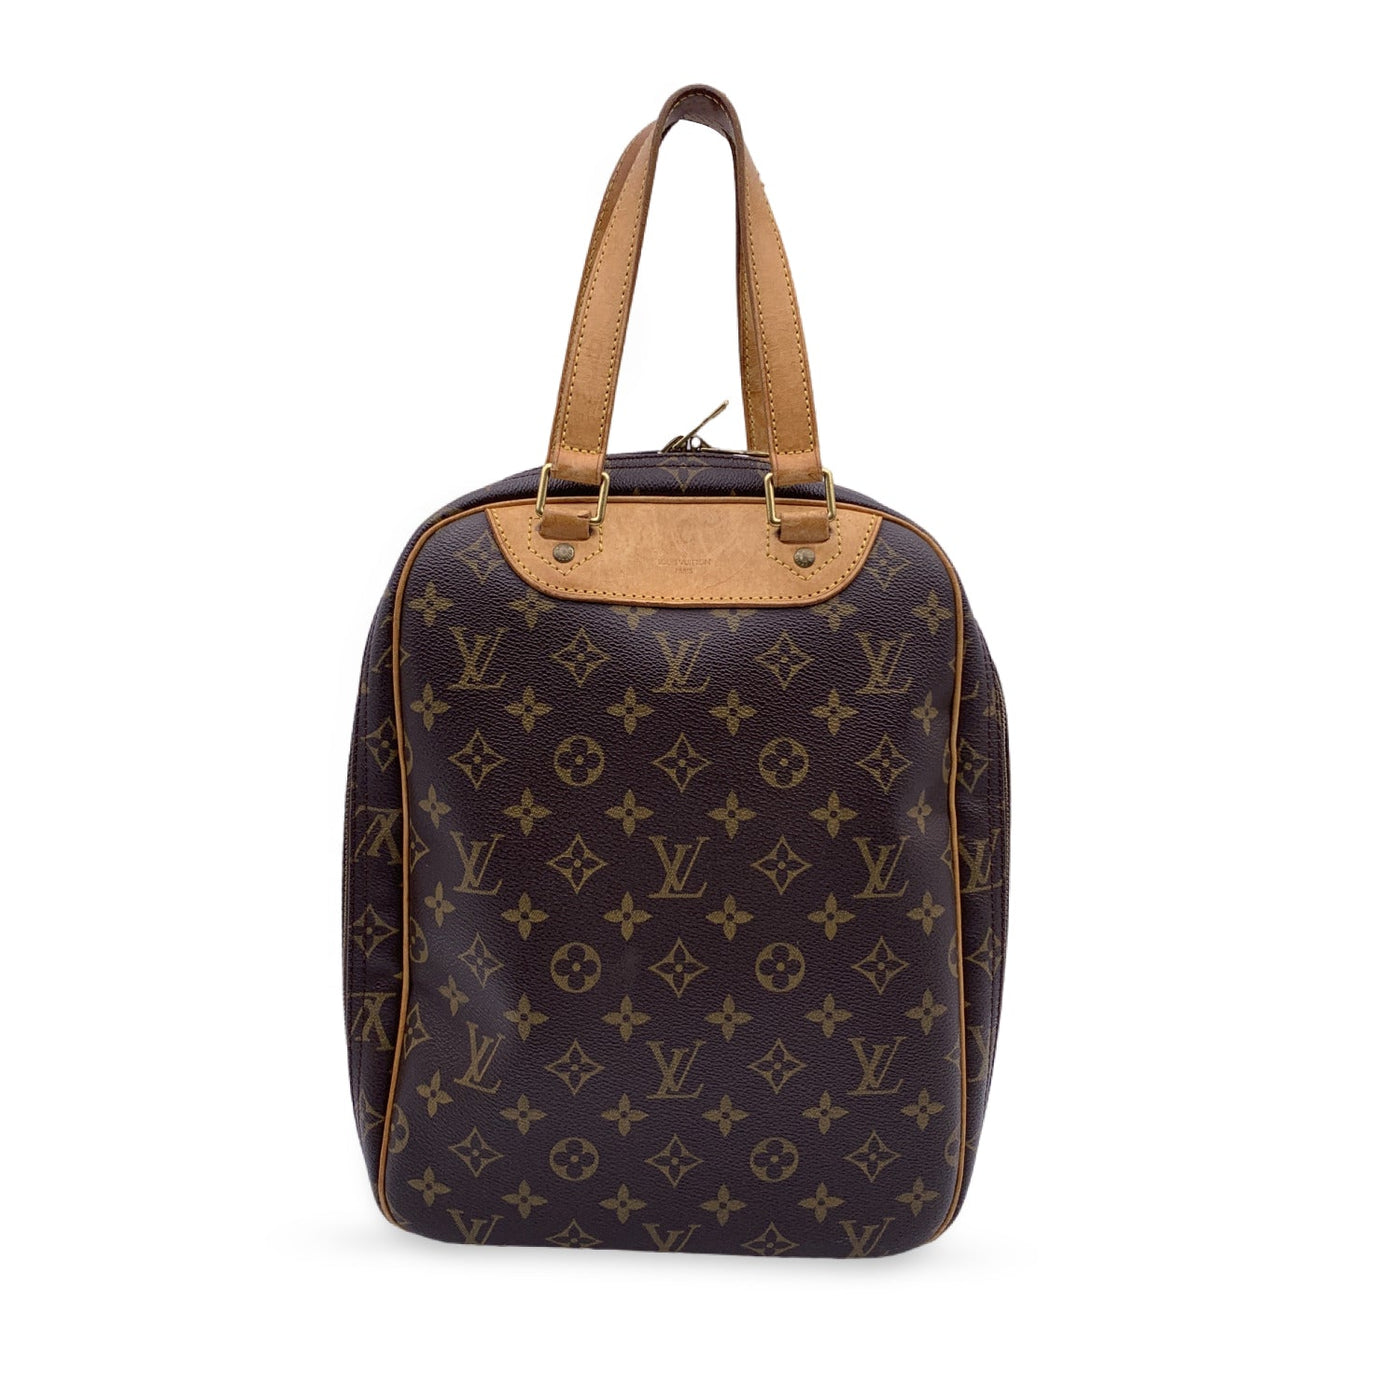 Vintage Louis Vuitton monogram travel bag